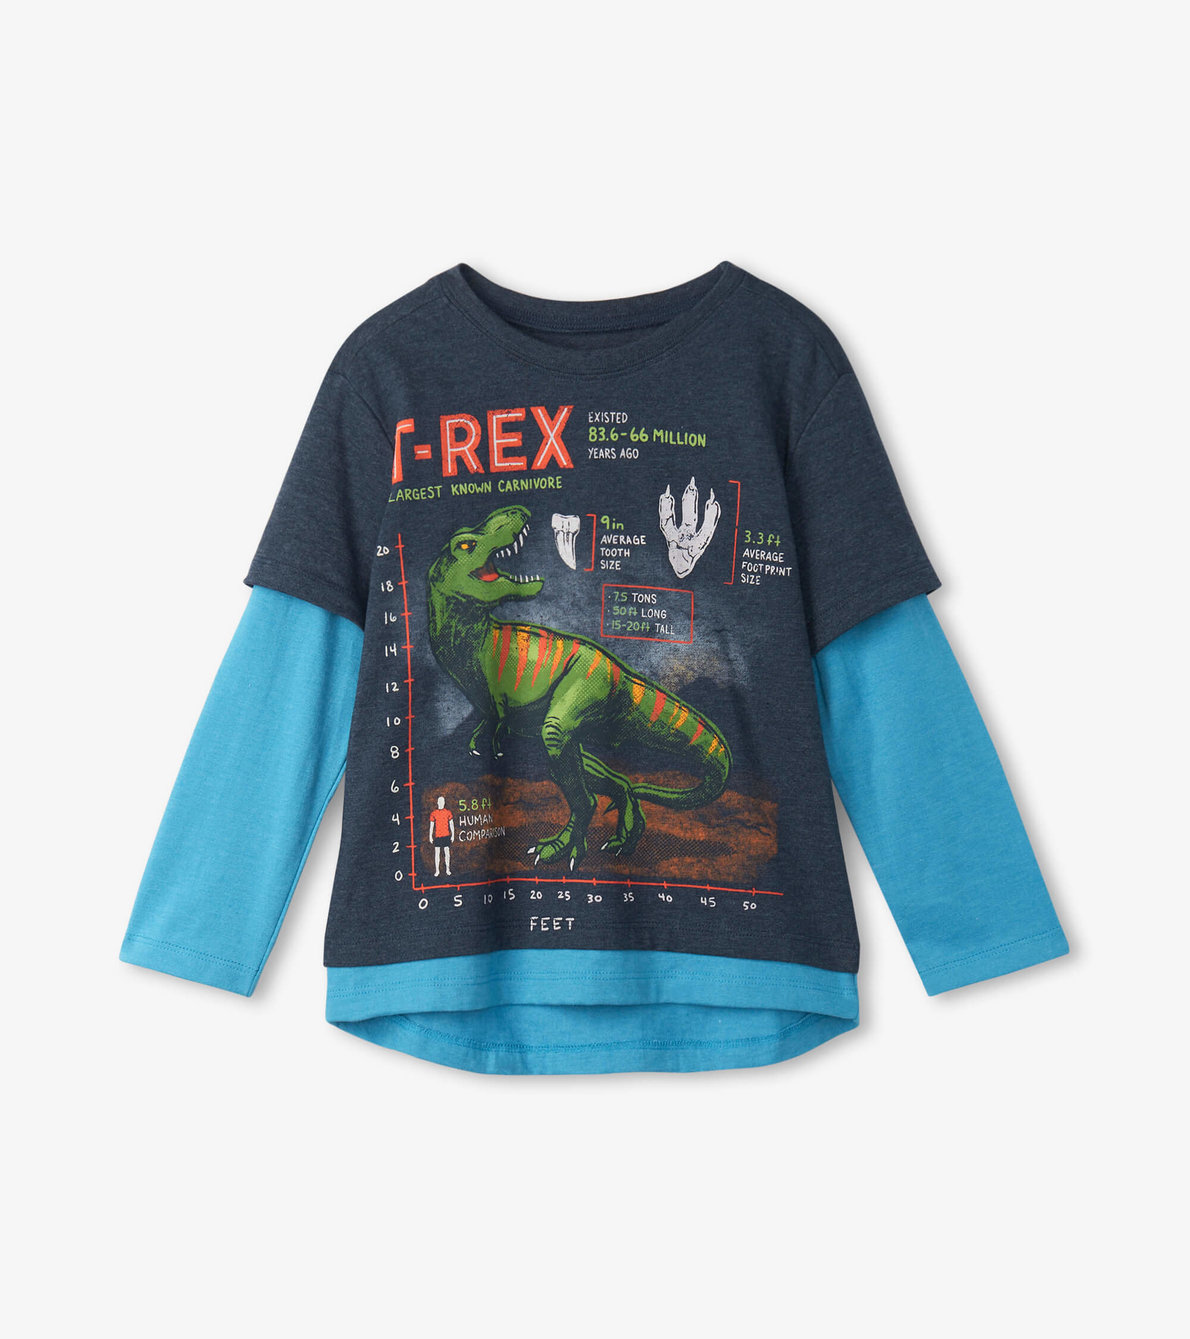 View larger image of T-Rex Fooler Tee